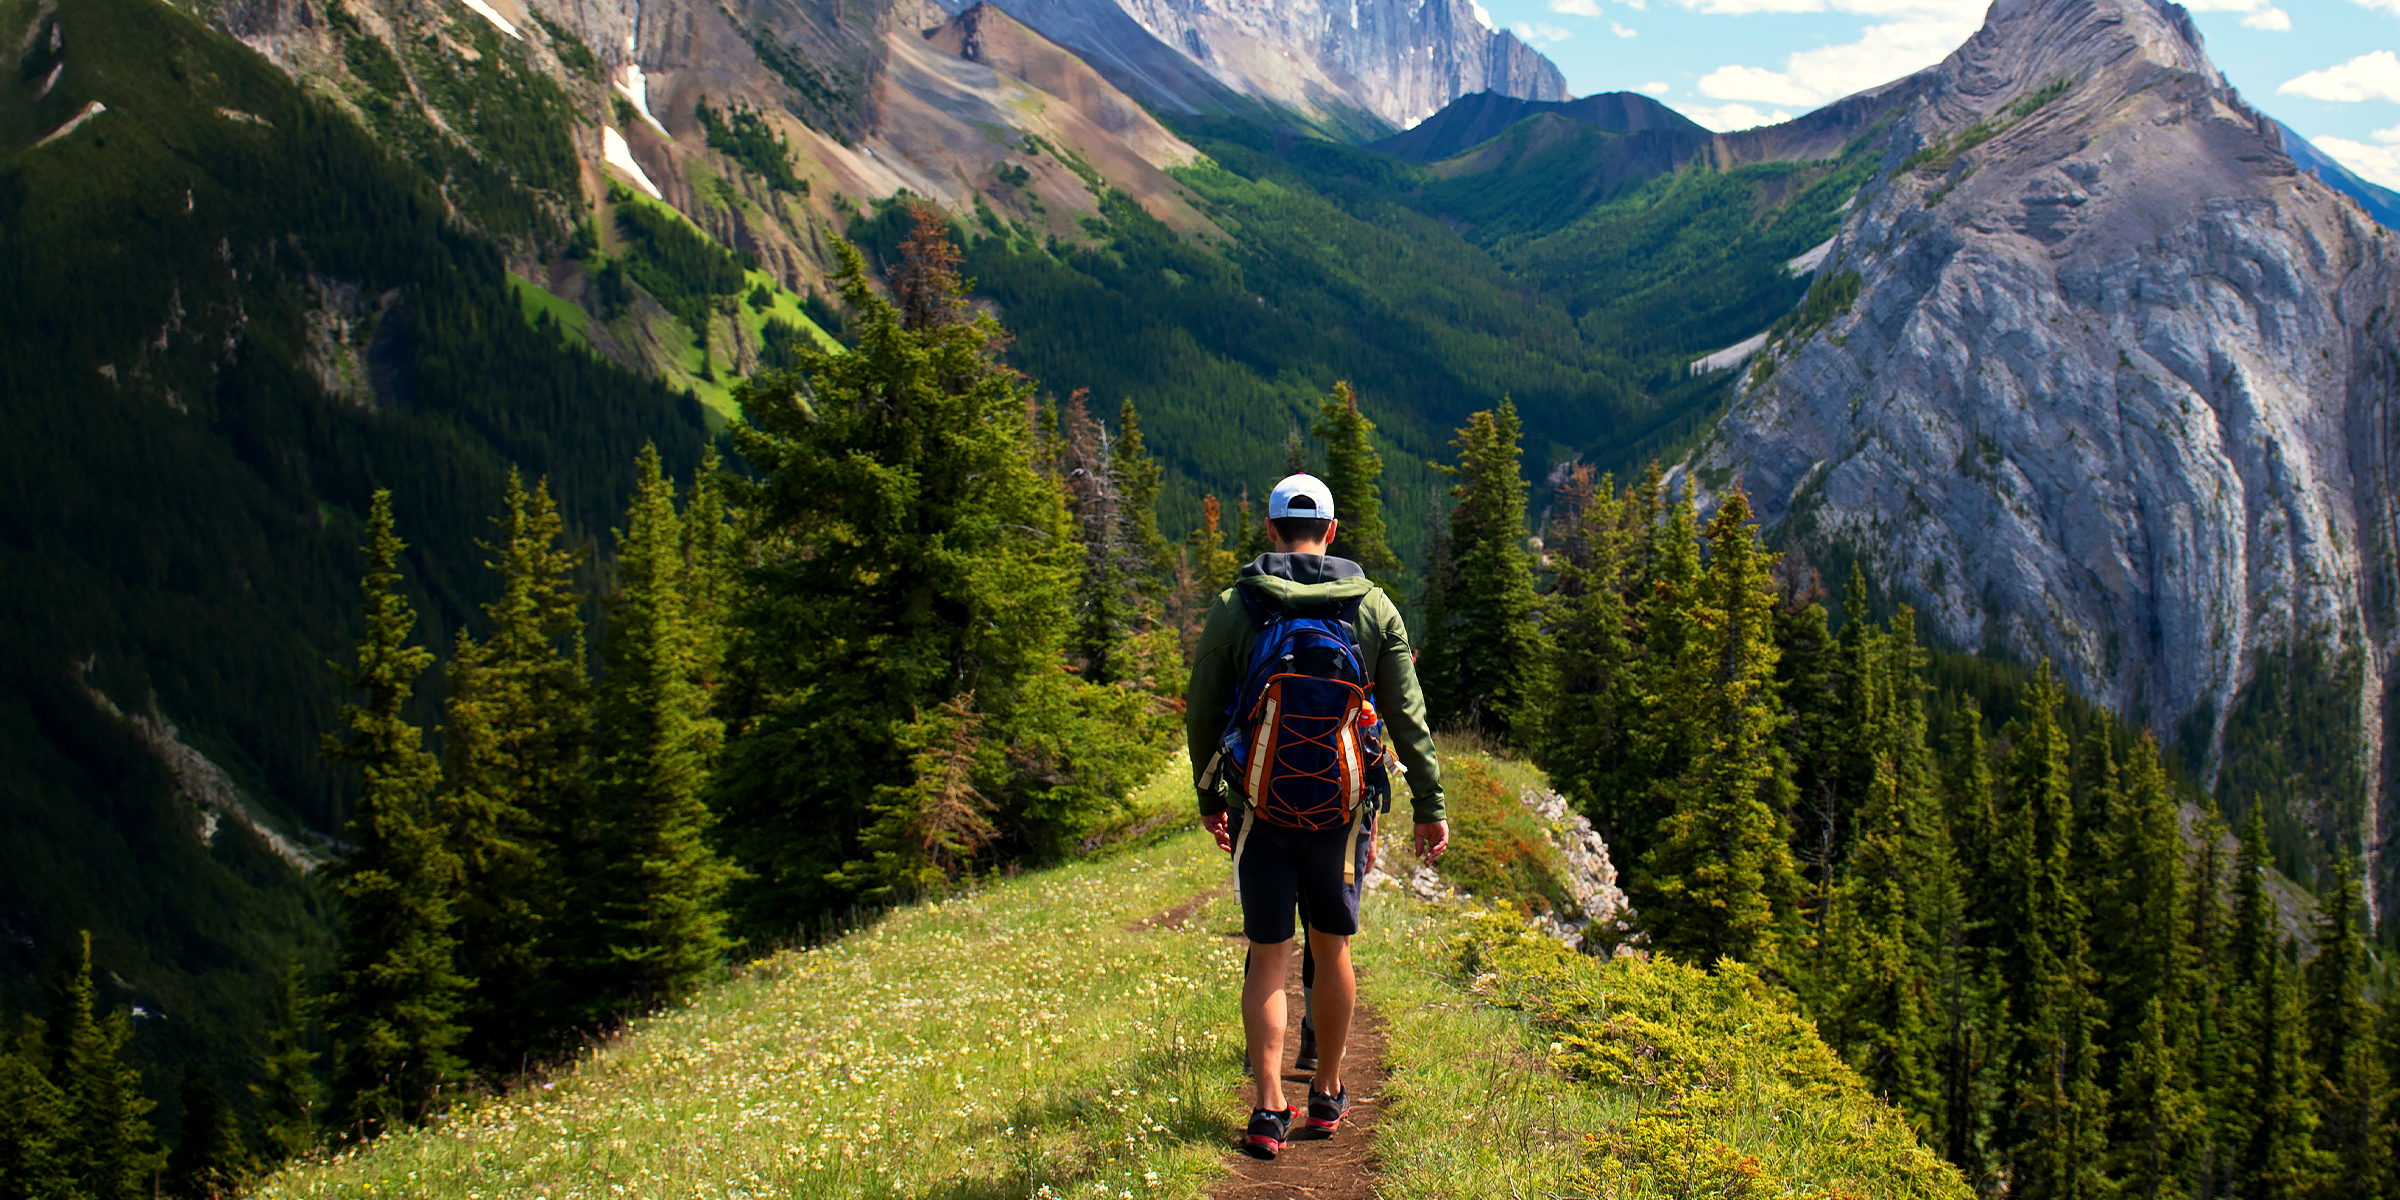 A man on a hike | Source: Shutterstock